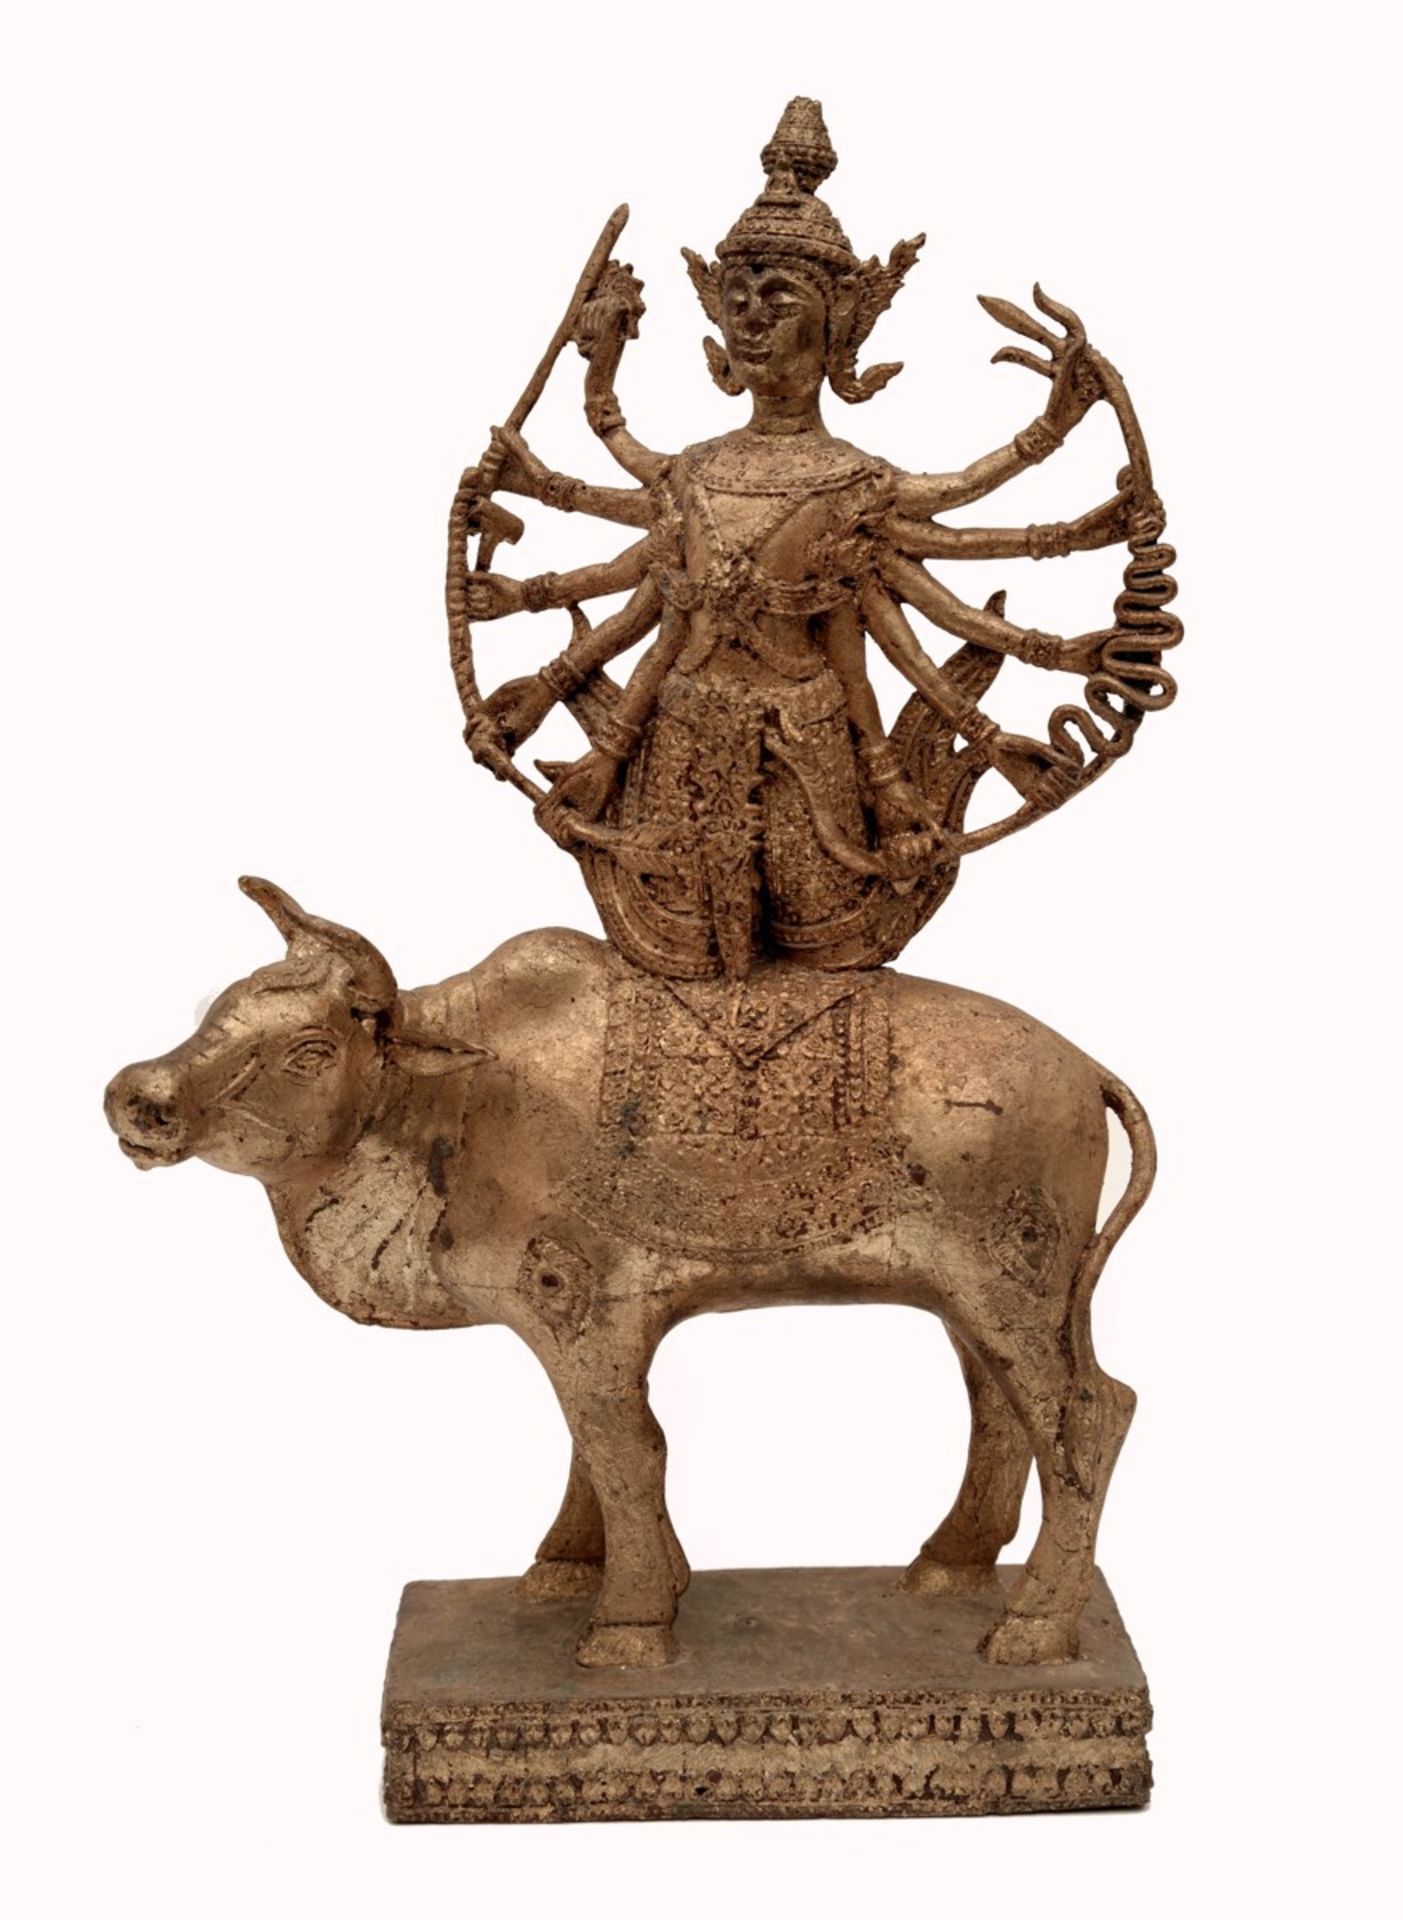 A Shiva on the Bull Nandi